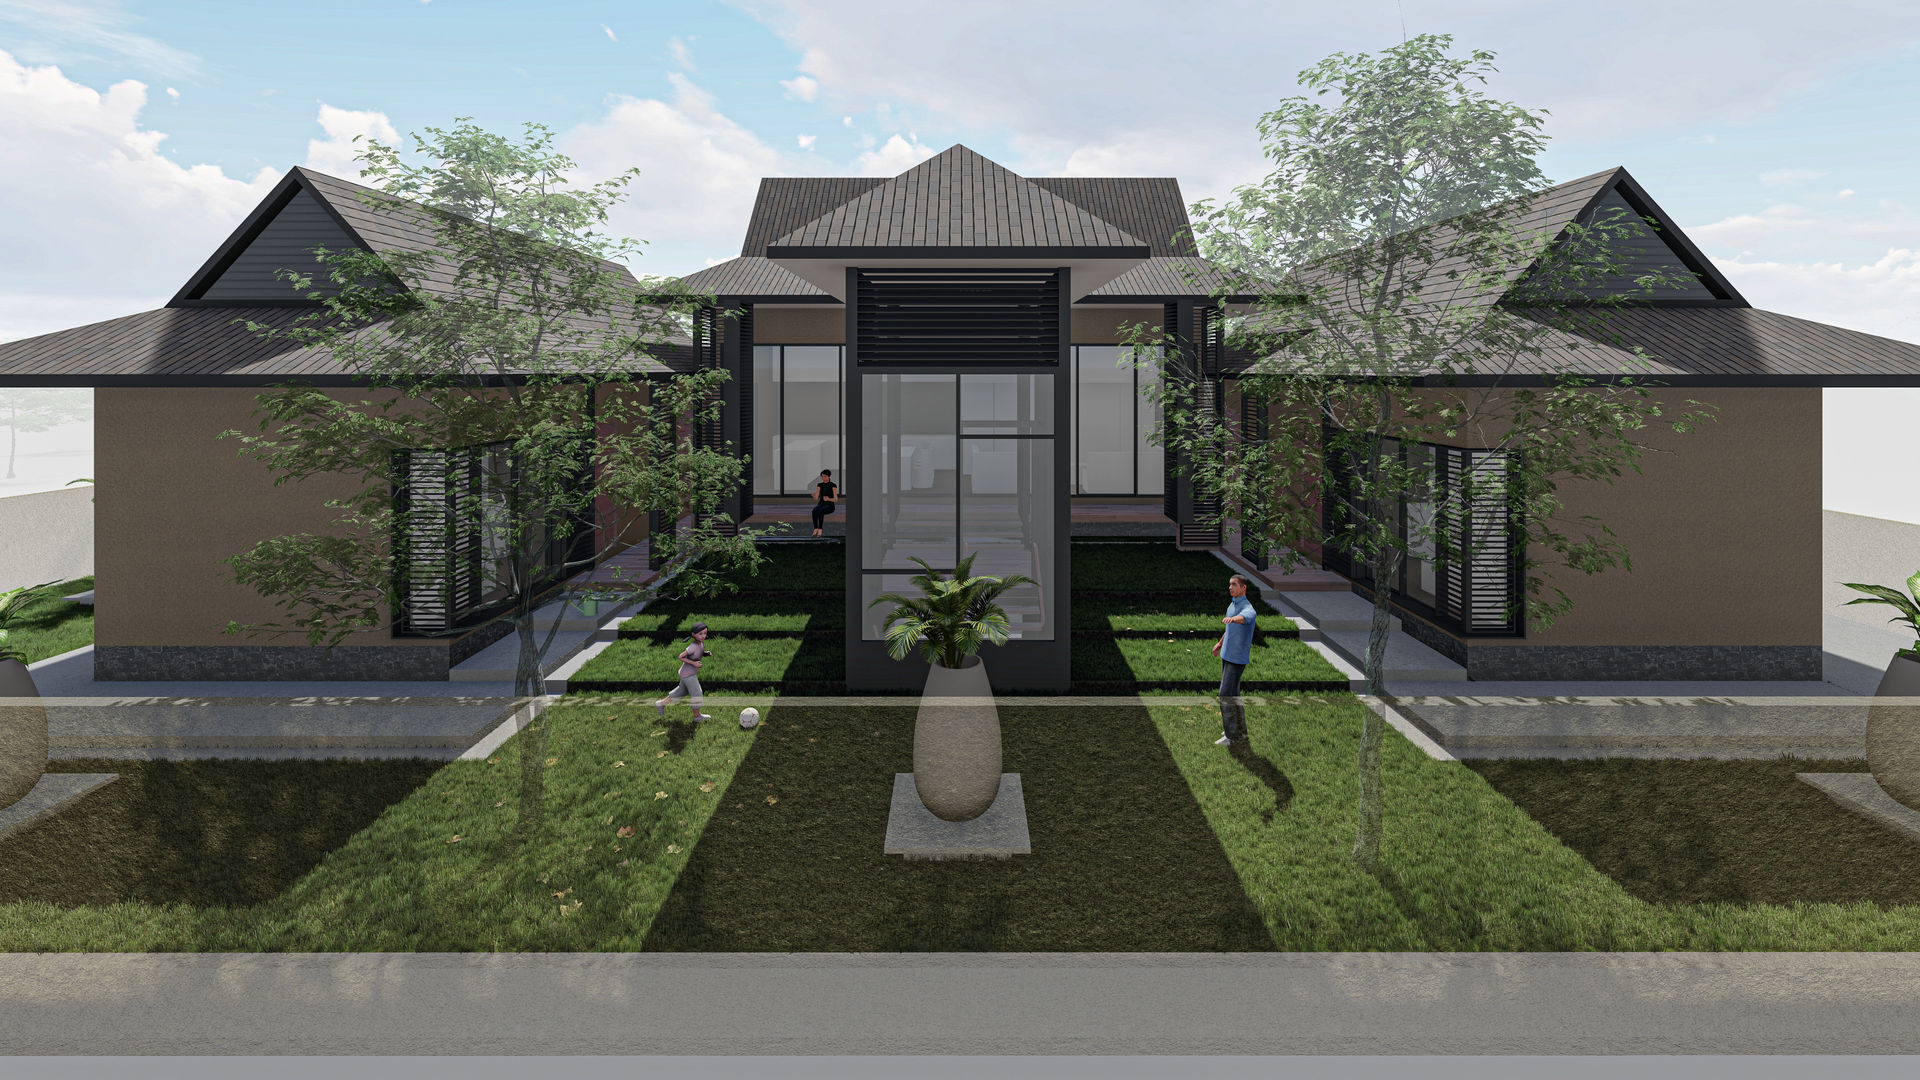 Internal Courtyard With Entrance to Sub-Basement Carpark Vision Design - Sarawak Garden Shed Bricks